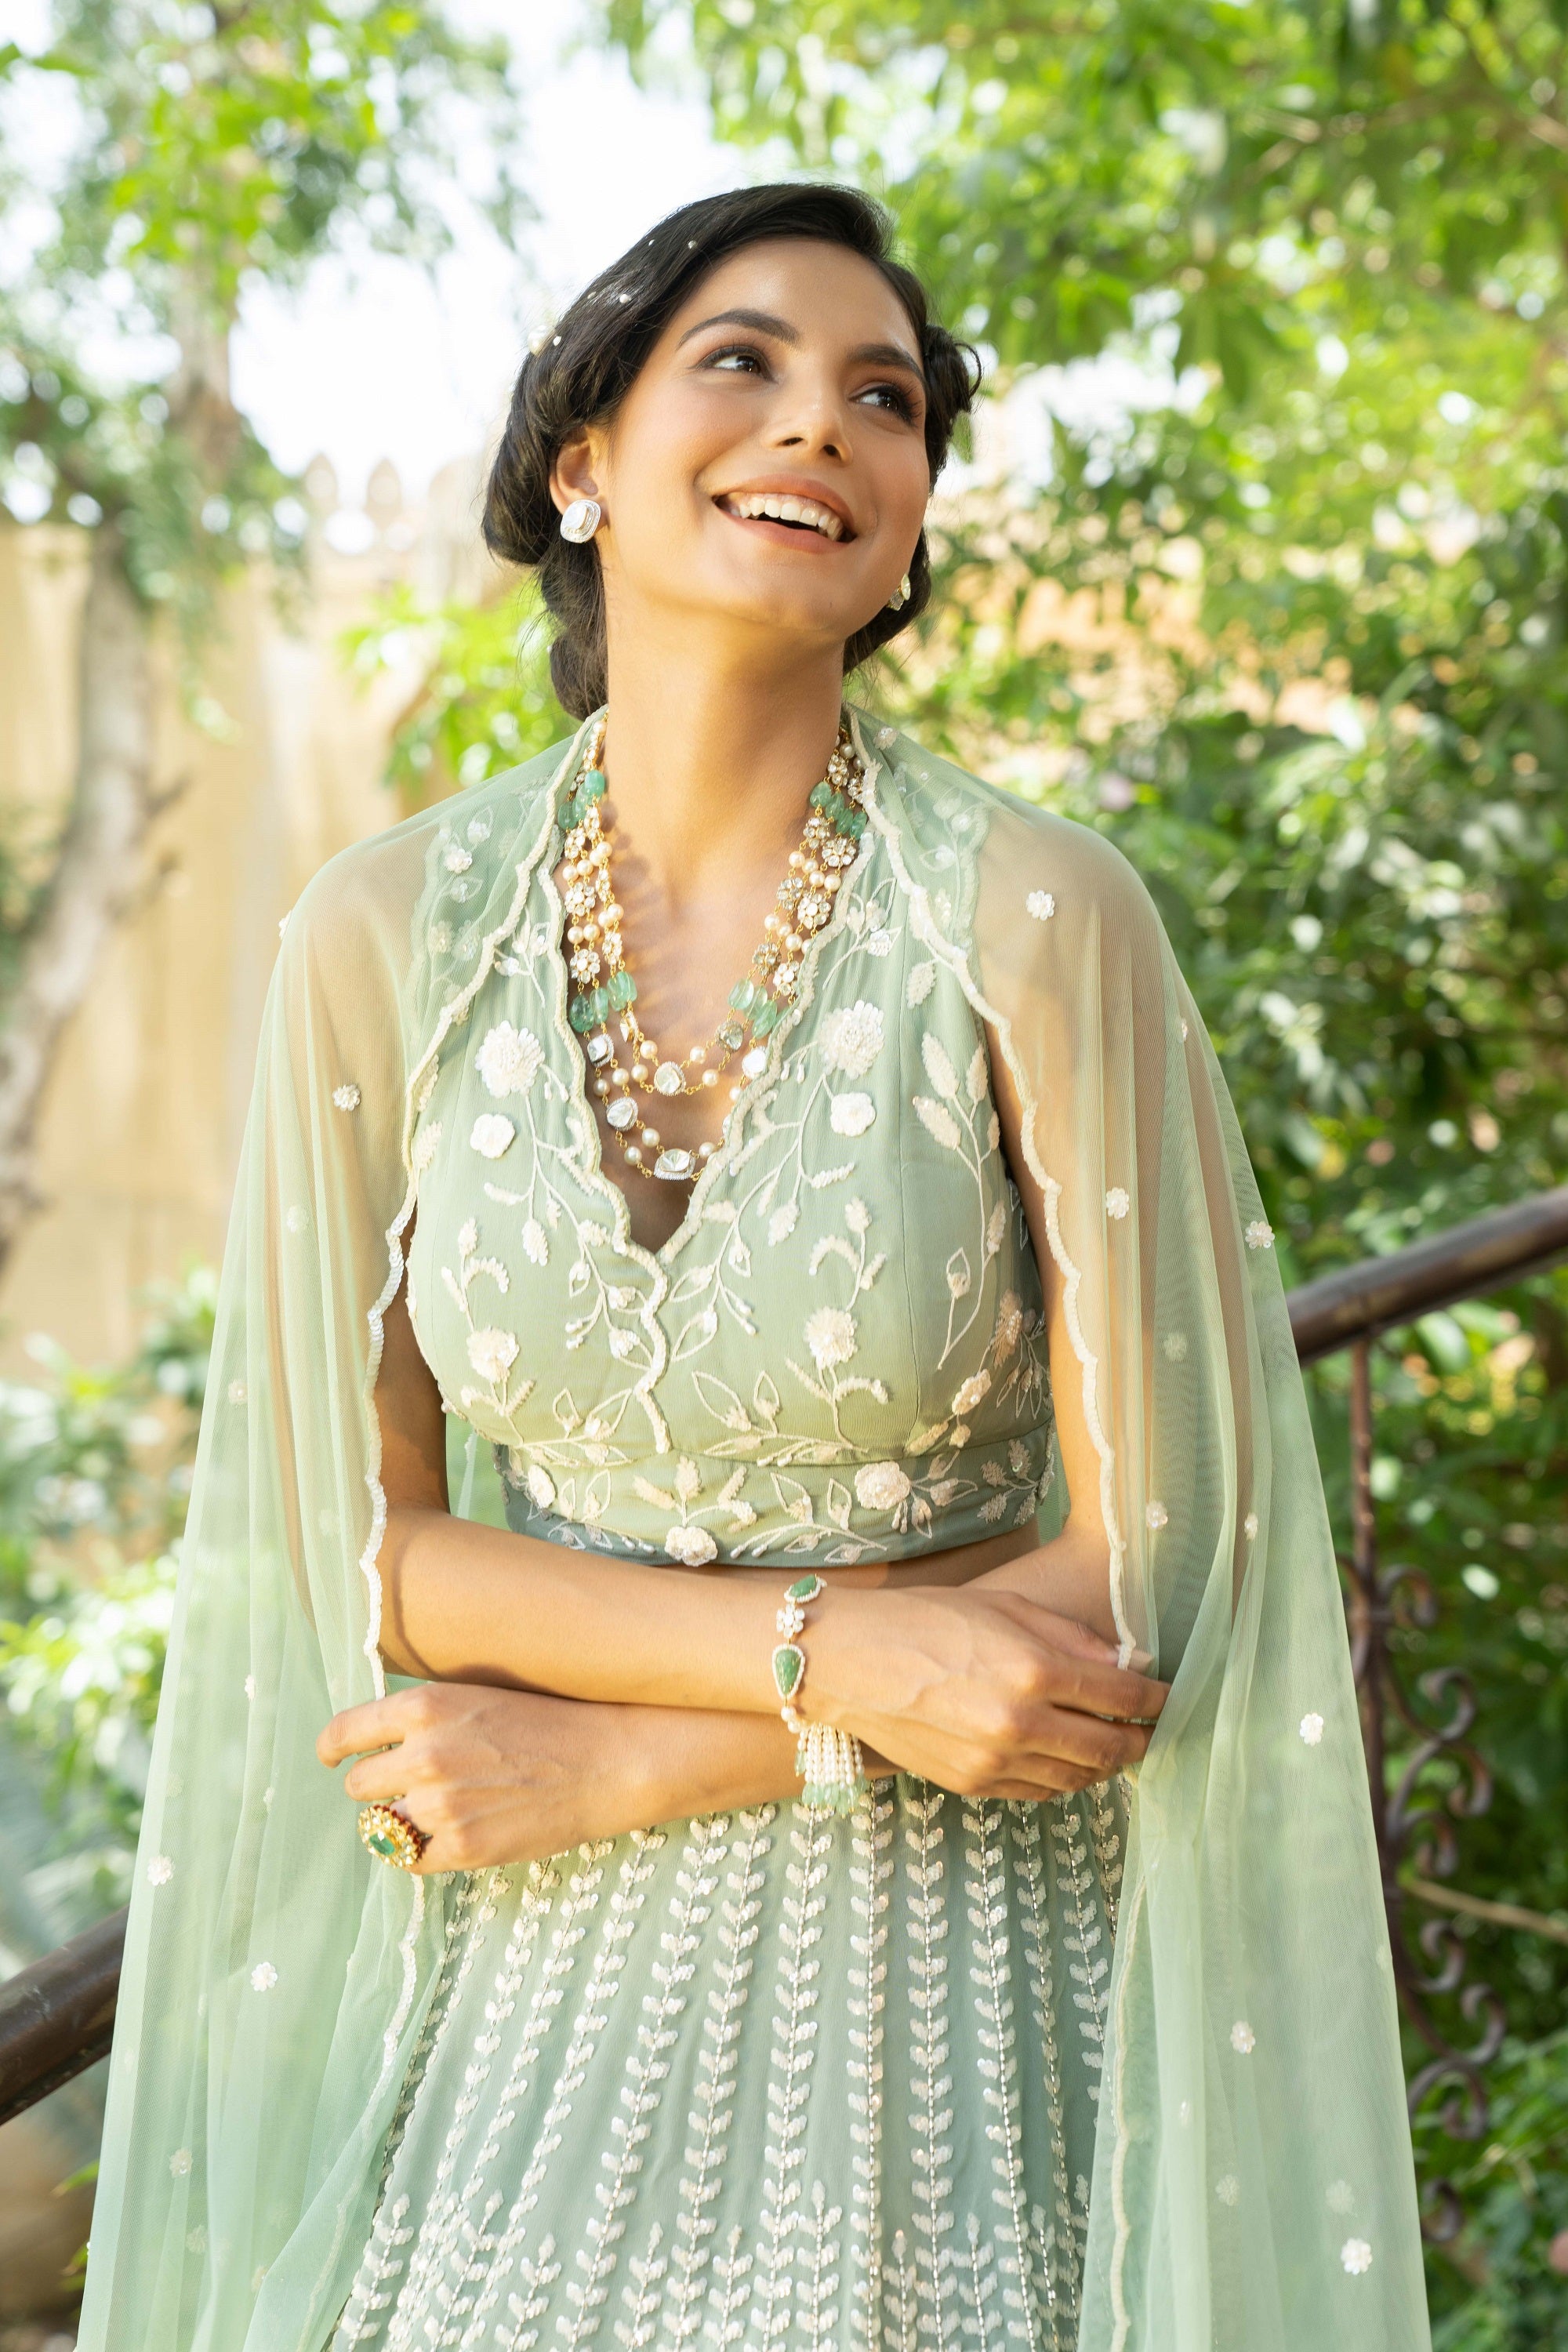 How to style jewellery with green bridal lehenga - jewellery ideas for green  lehenga - YouTube